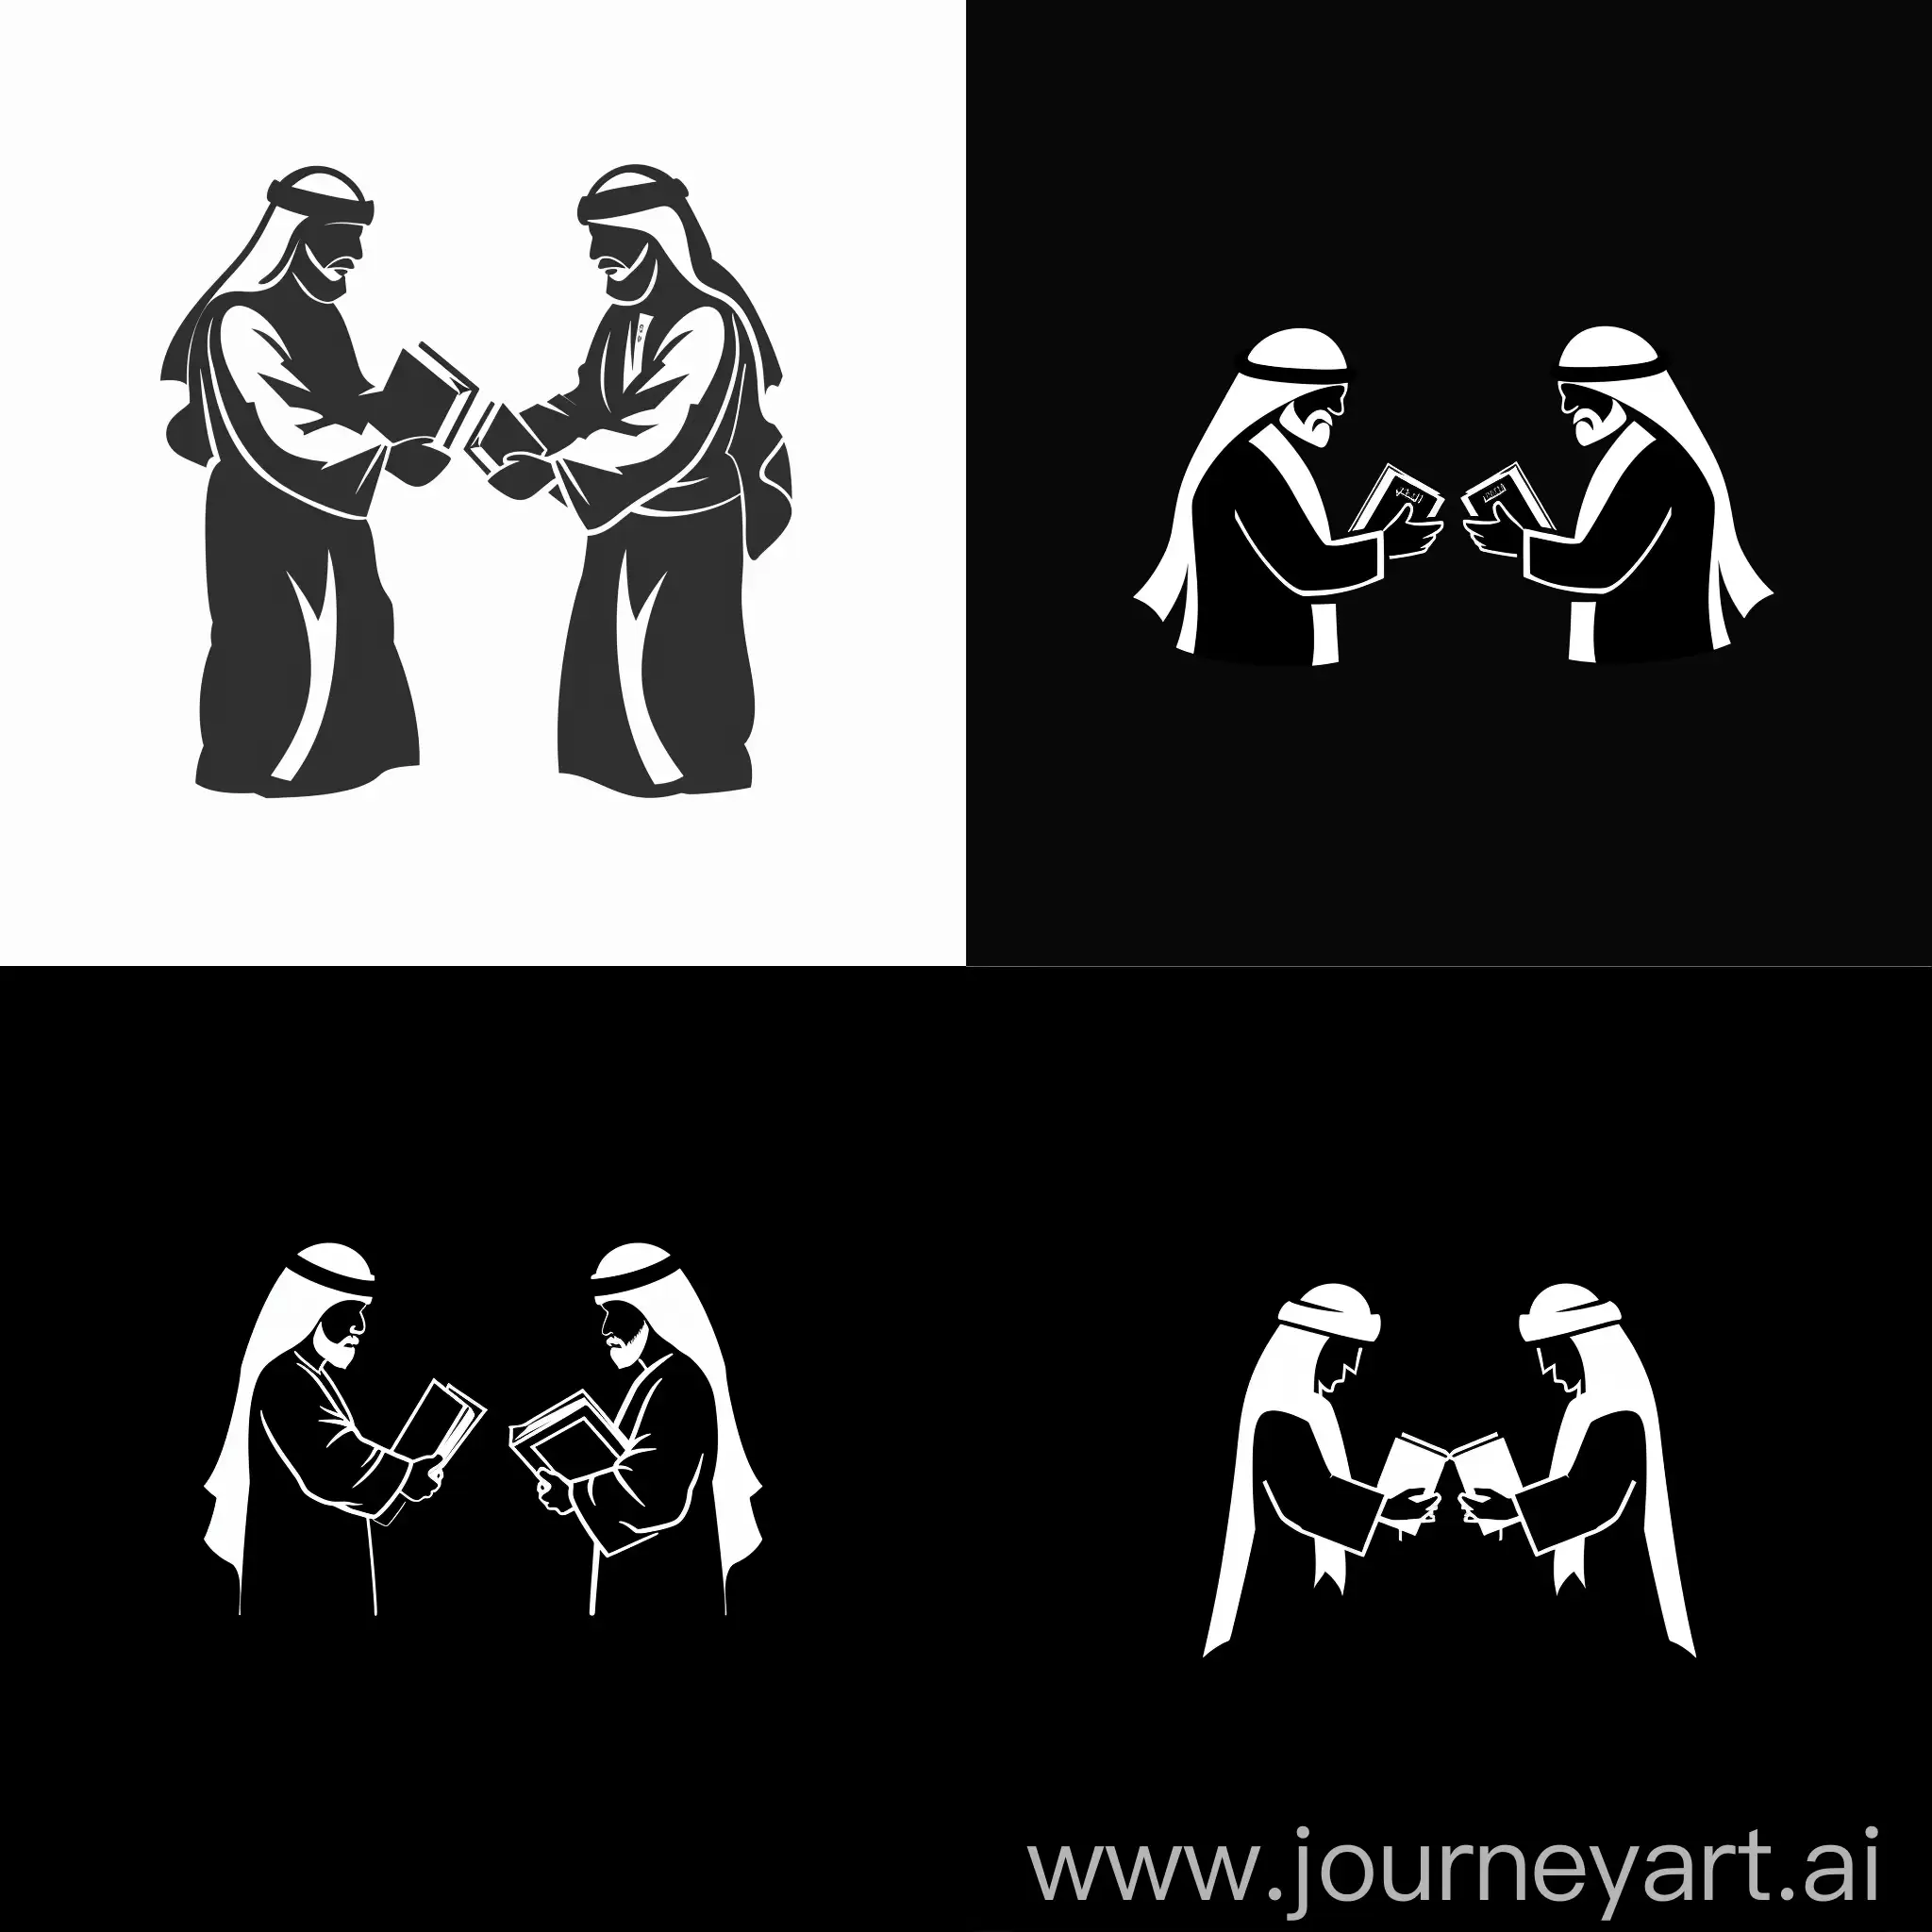 Black-Bedouin-Men-Exchanging-Books-Logo